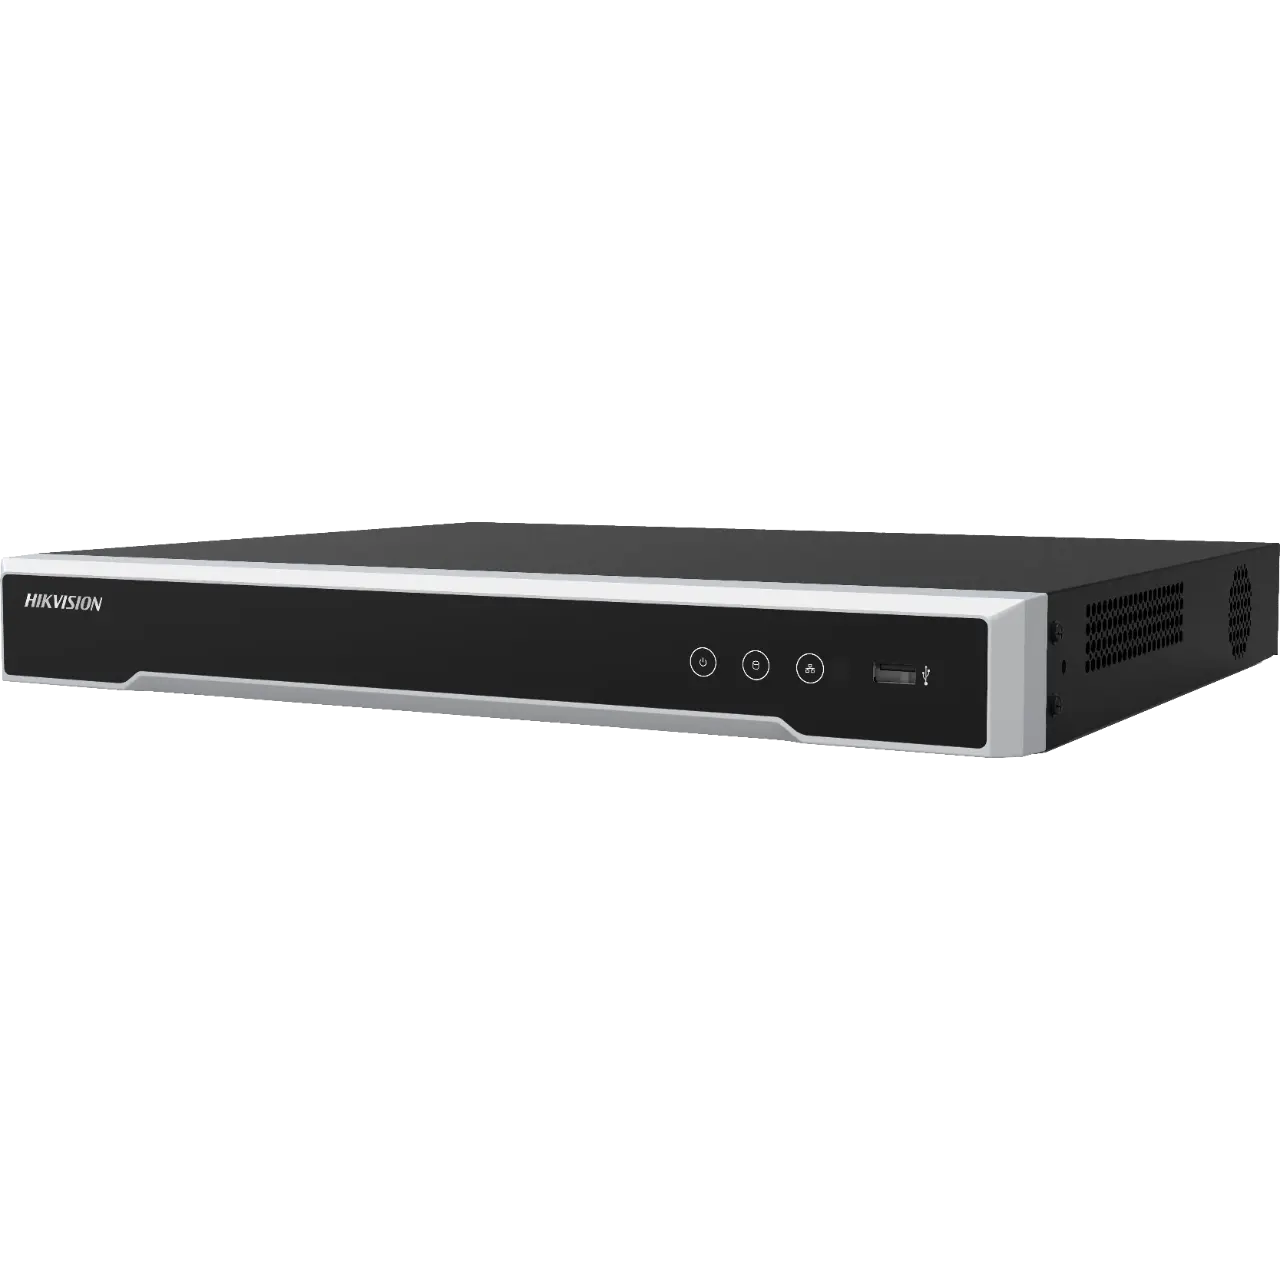 Hikvision DS-7632NI-K2(STD), 32-ch 1U 4K NVR, Up to 32-ch IP camera inputs